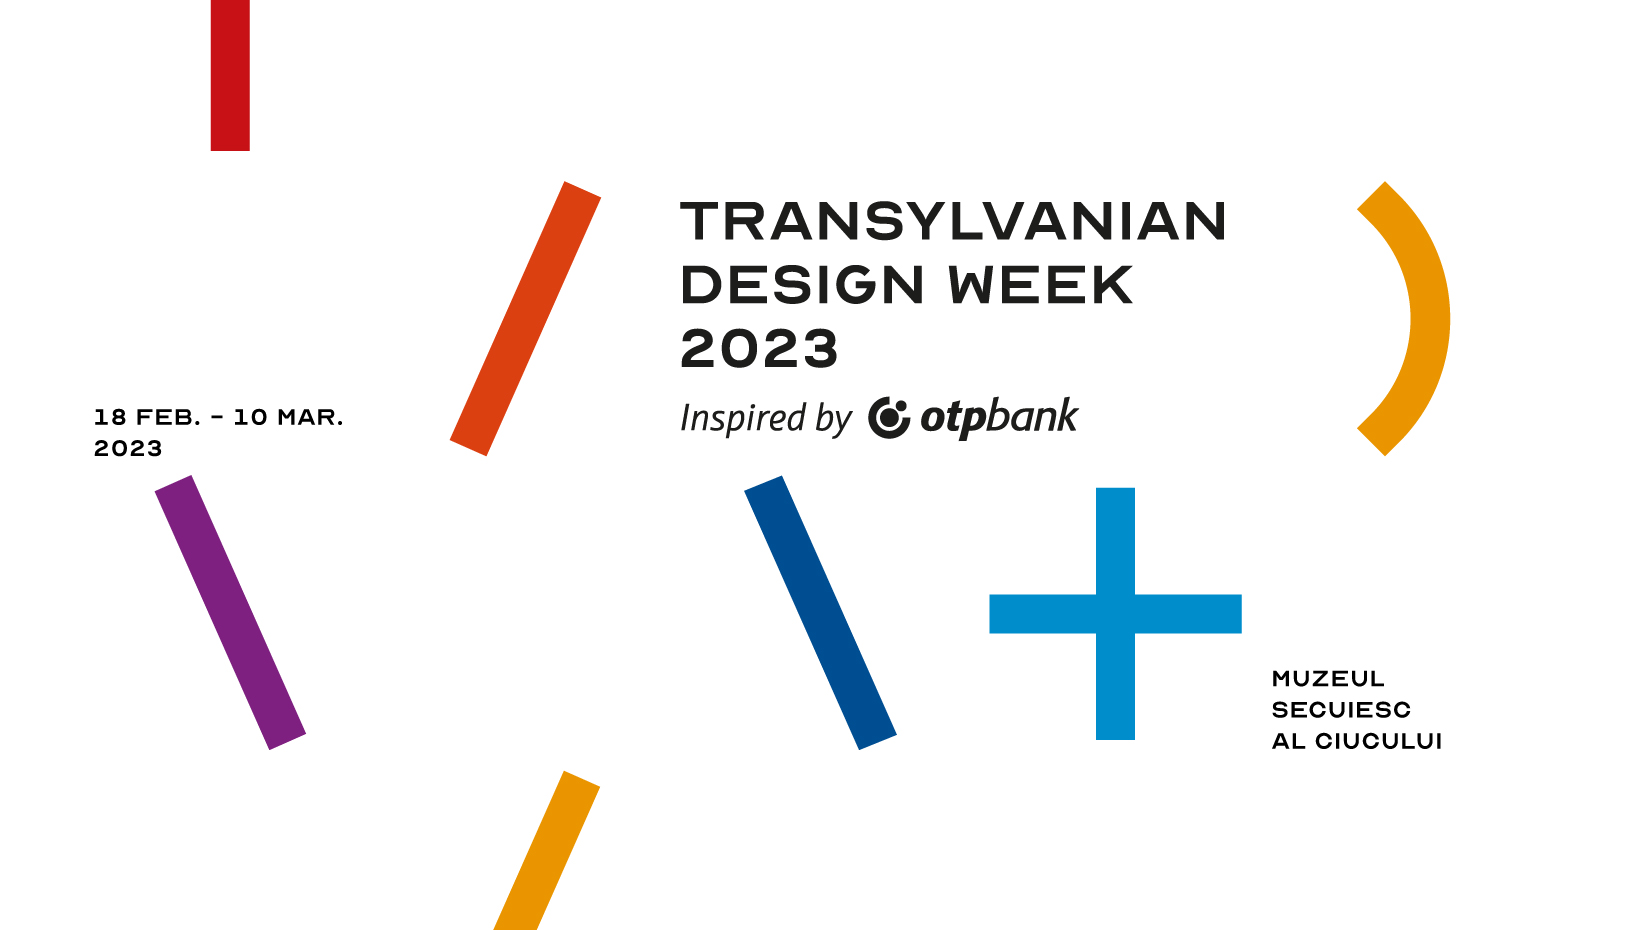 Transylvanian Design Week